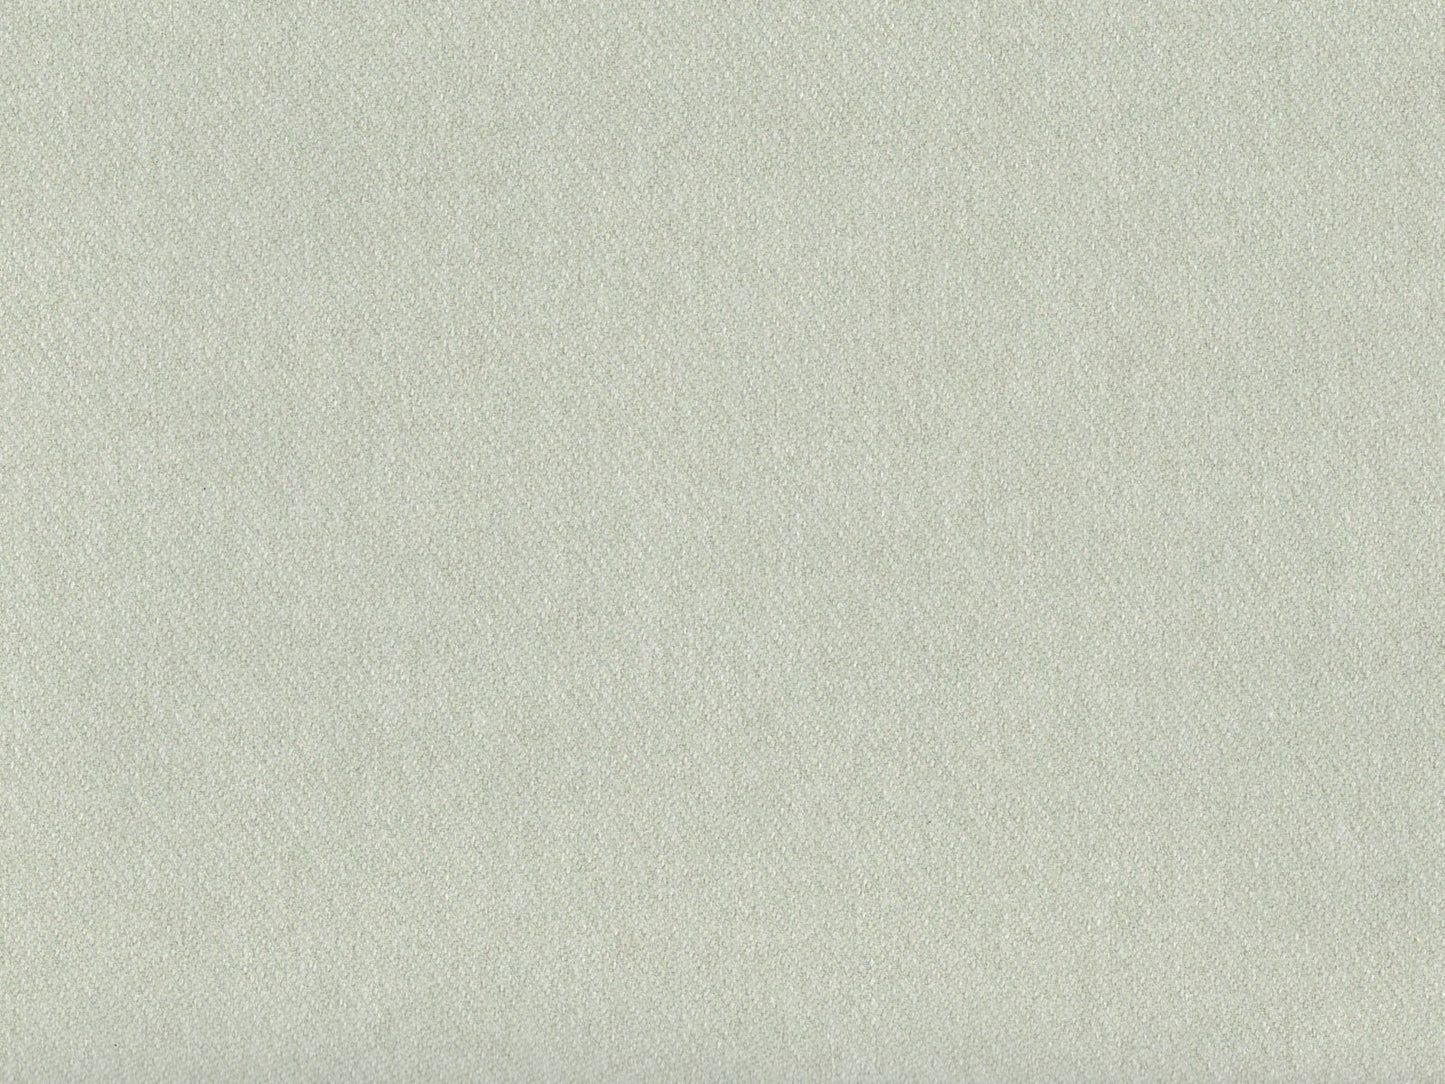 Sonata Fabric Samples - Rydan Interiors